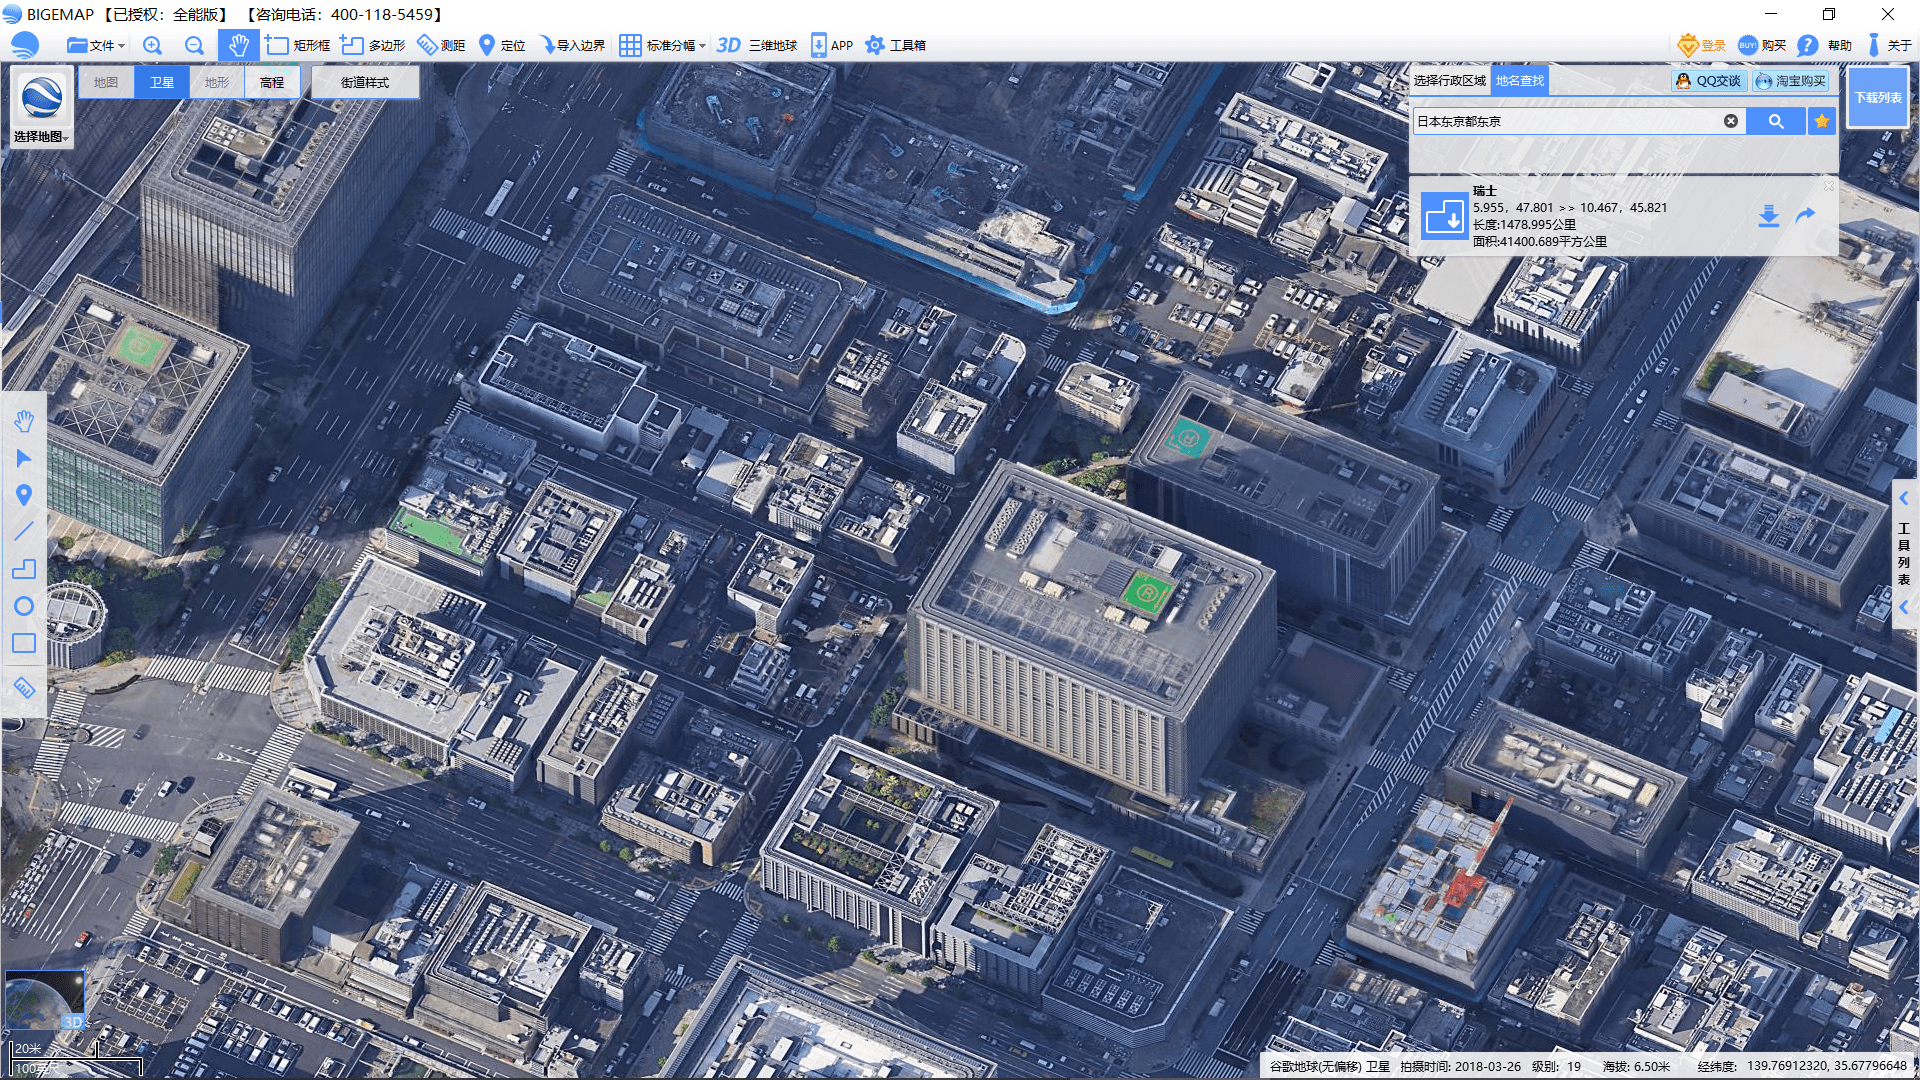 bigemap软件上的谷歌地球卫星地图更多高清卫星地图和免费资源,都在